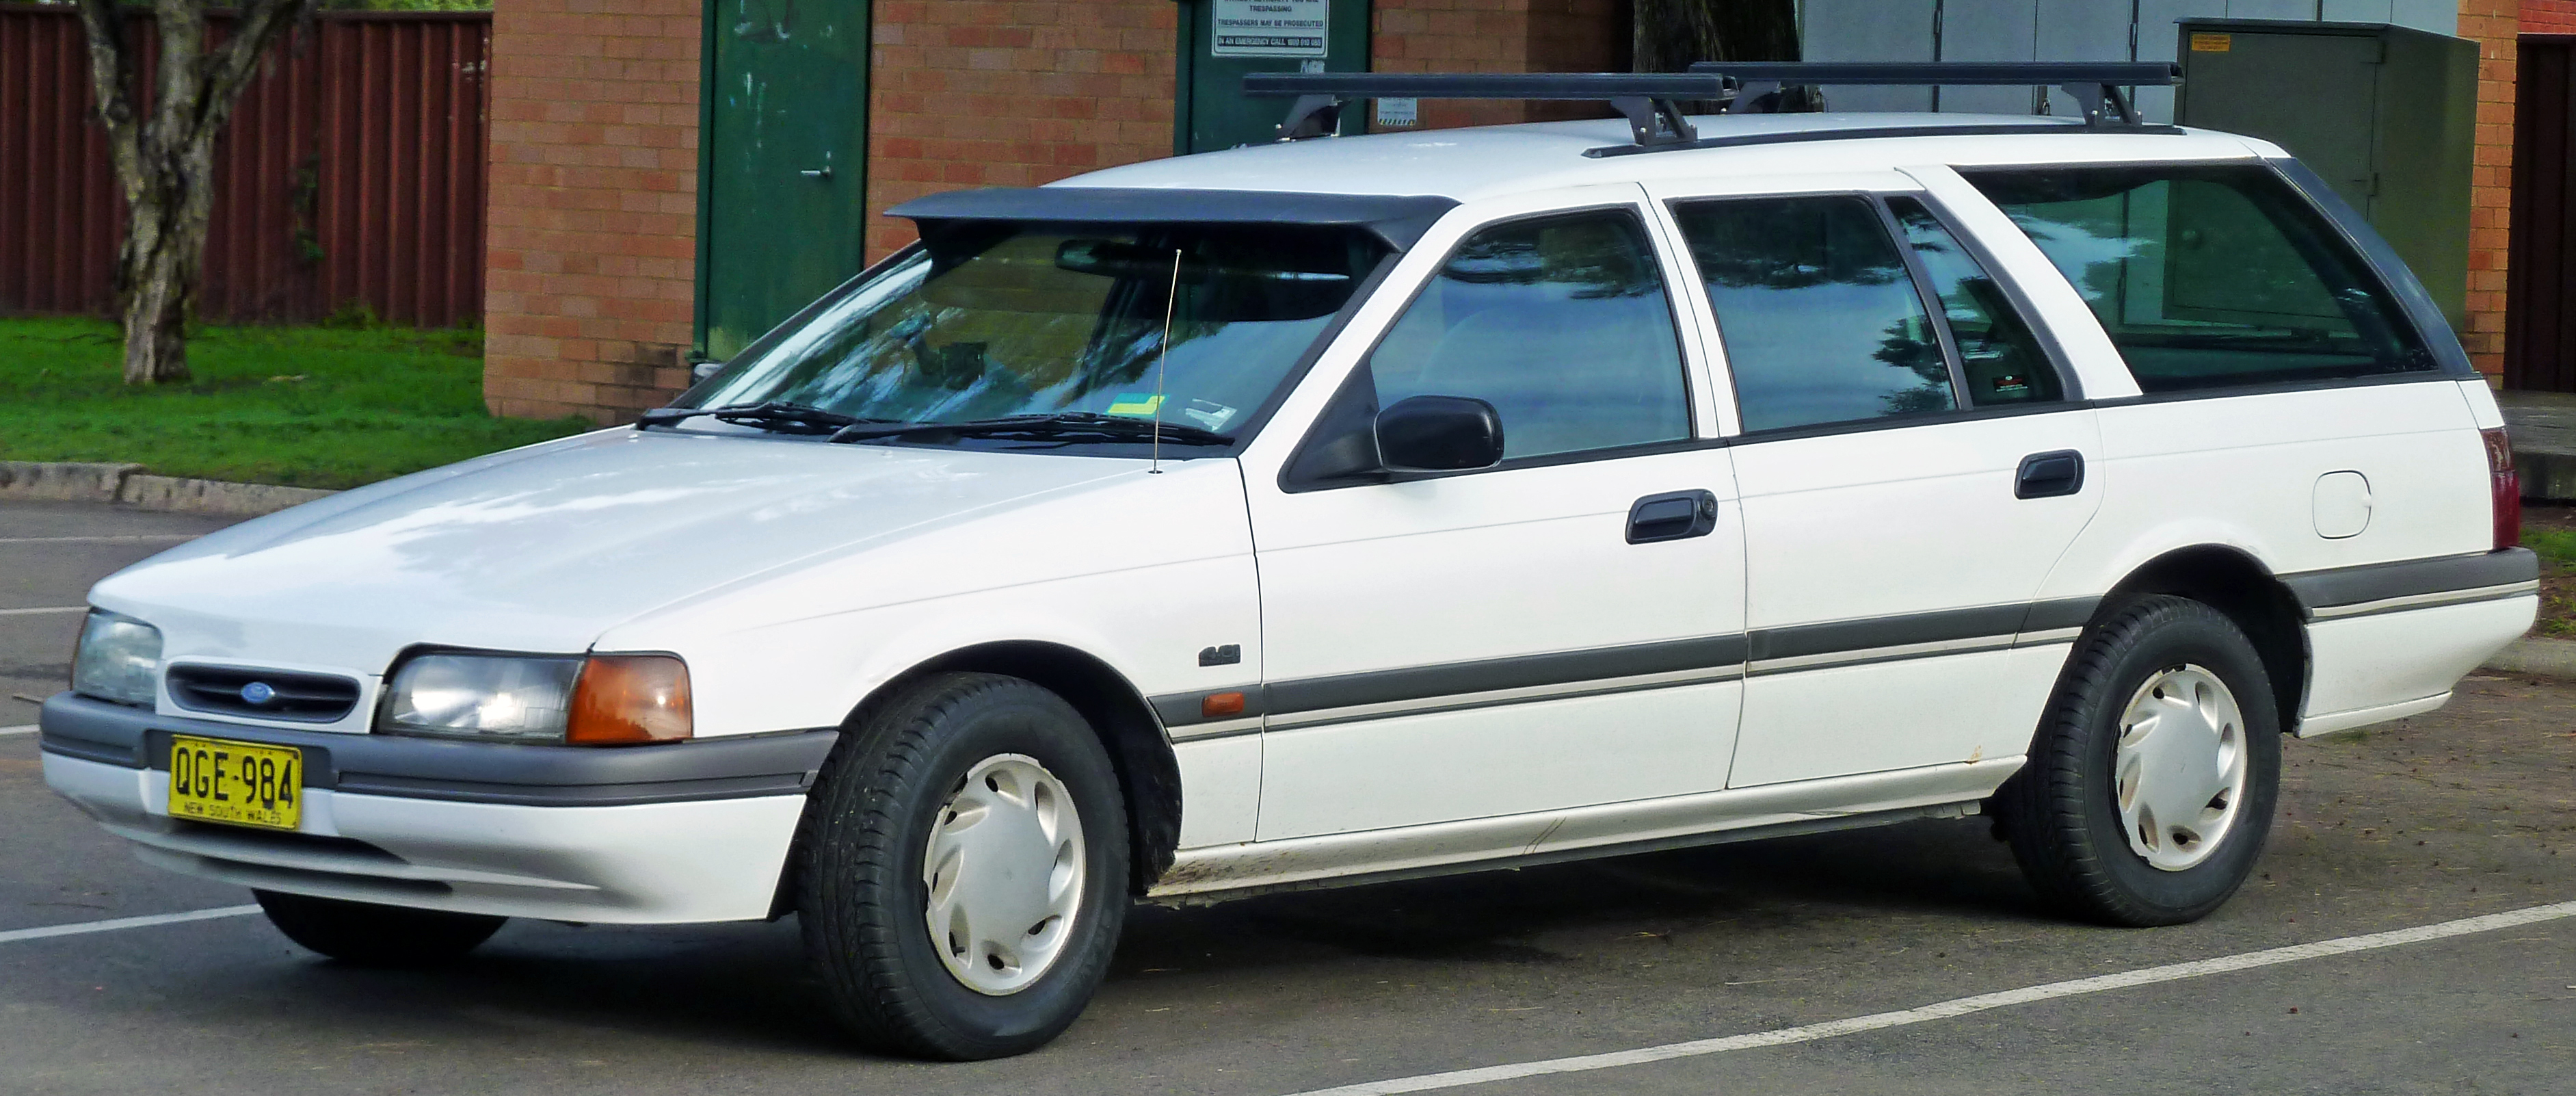 1993 Ford taurus station wagon specs #3